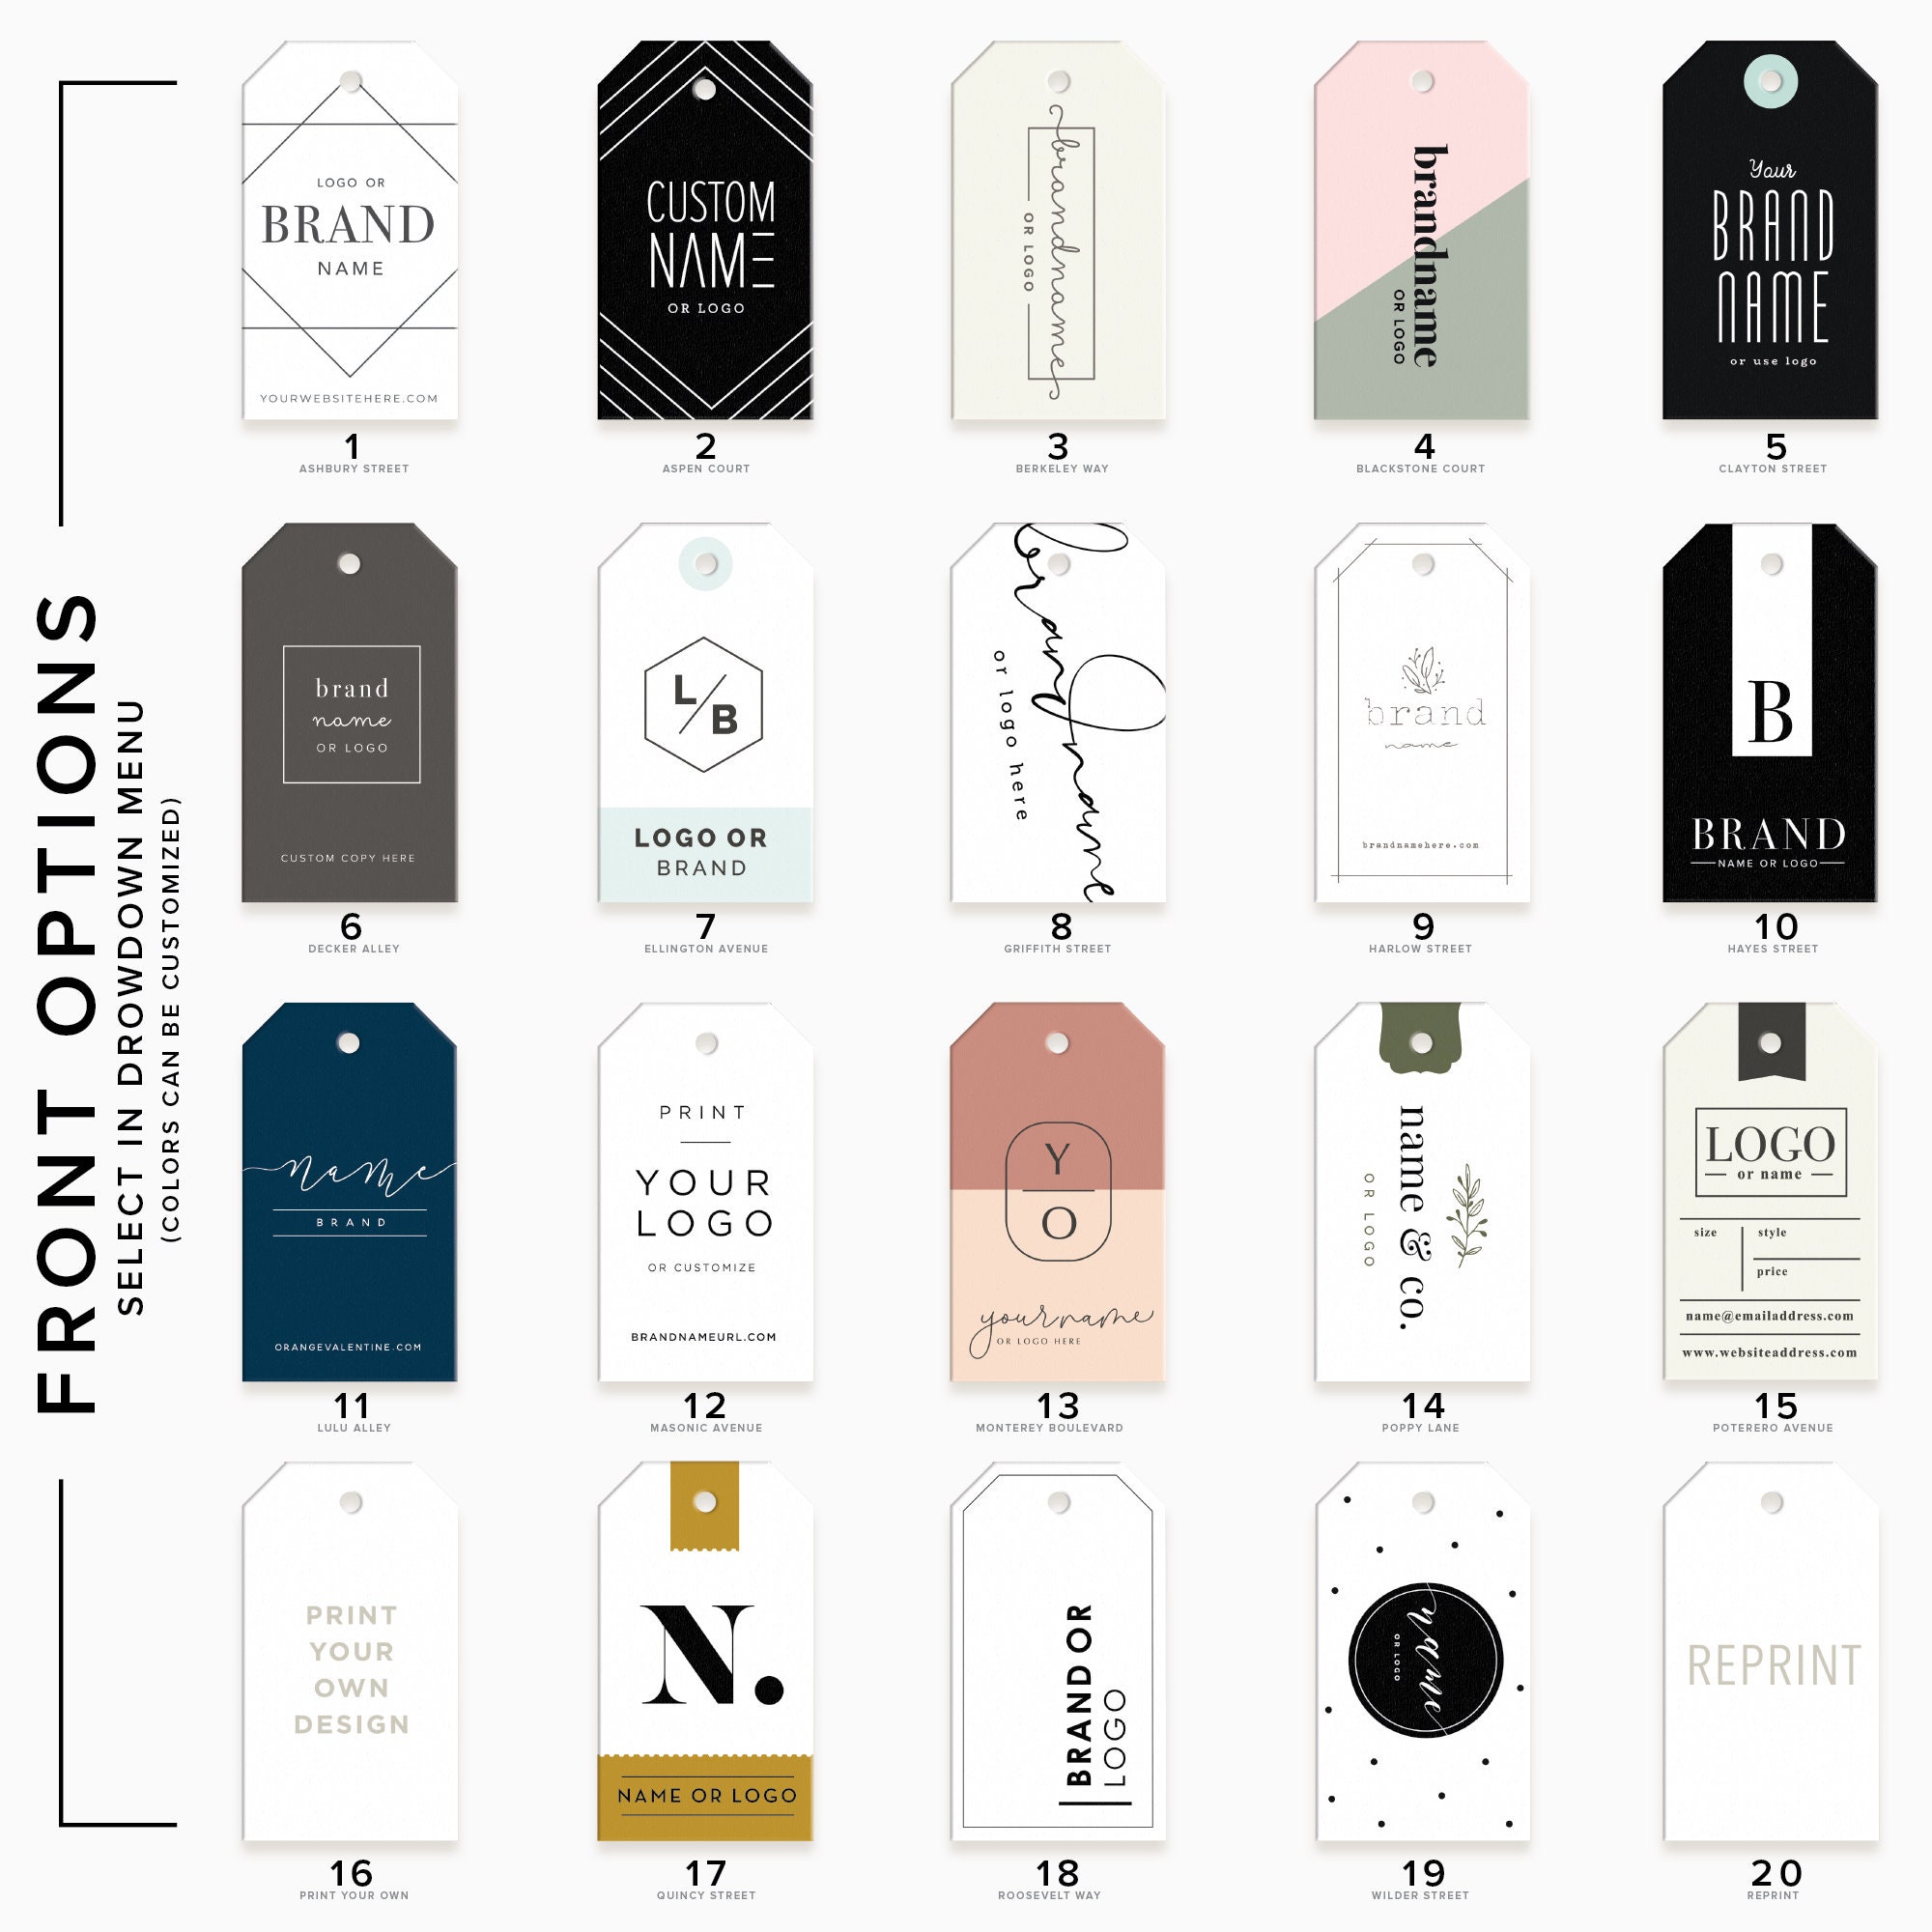 Custom Clothing Tags, Custom Business Card Tag, Hang Tag Custom Clothing  Label, Custom Hang Tags, Custom Favor Tags, Custom Hang Tags 